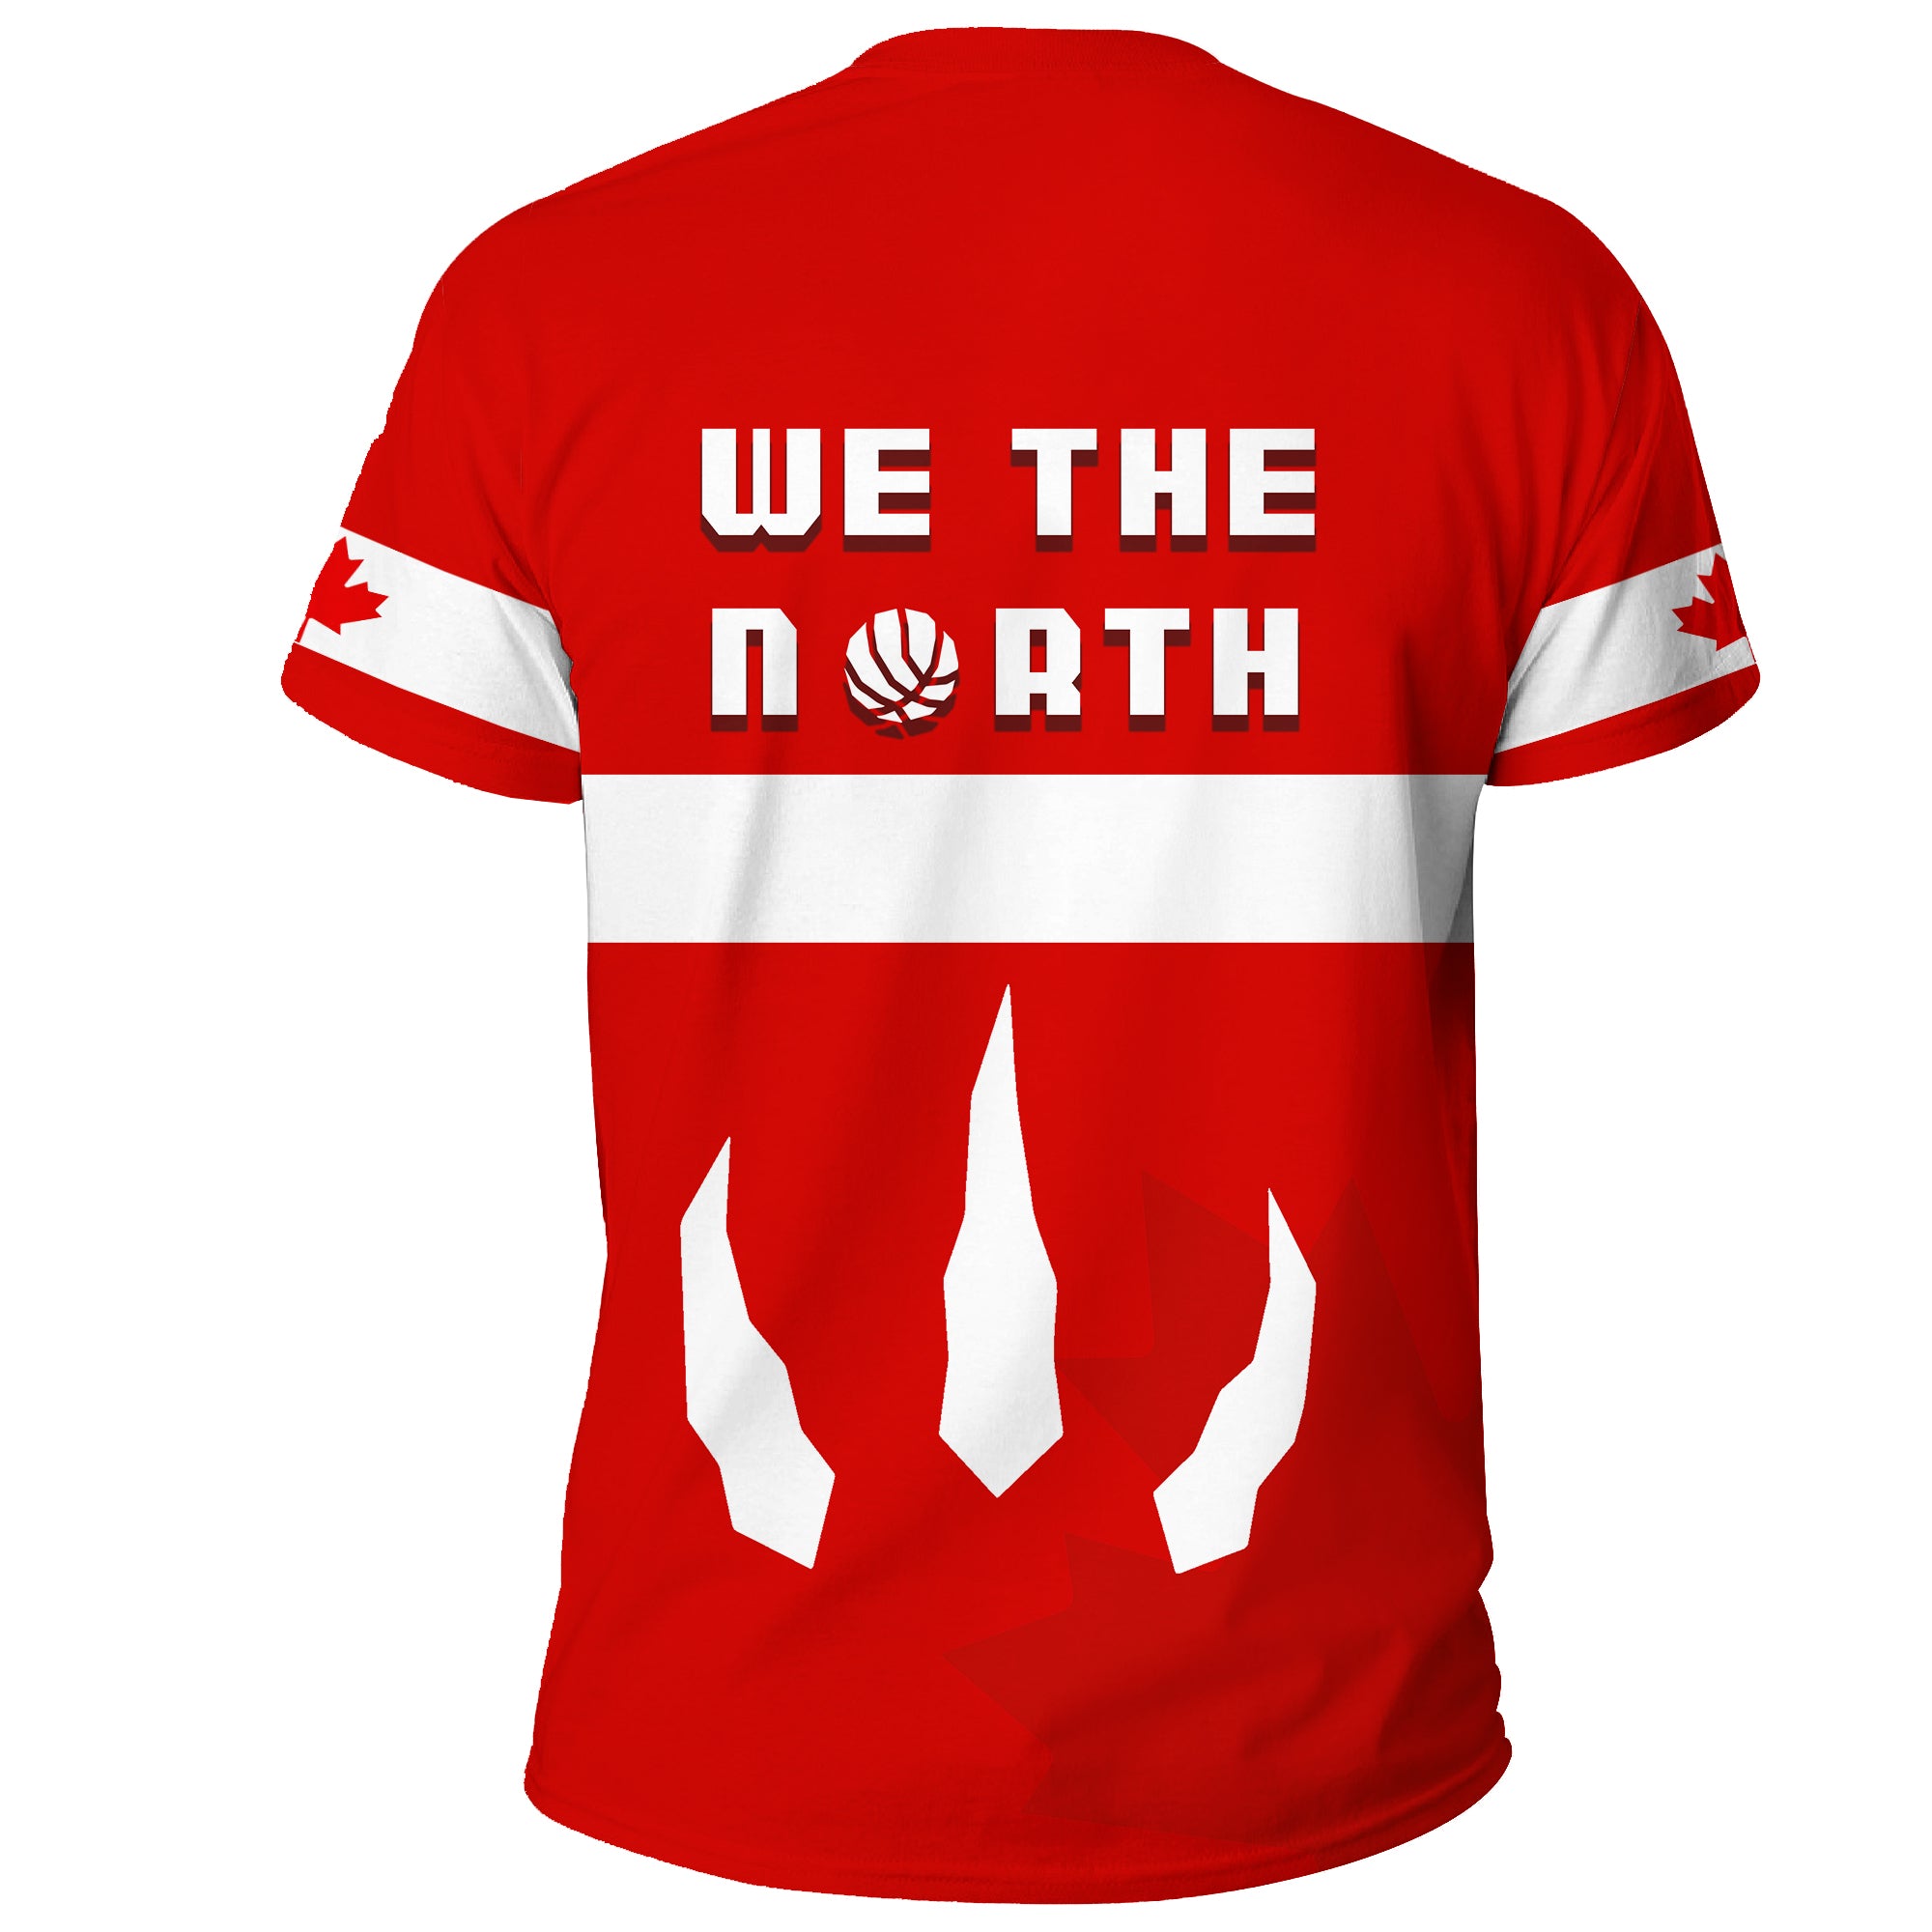 the north toronto jersey